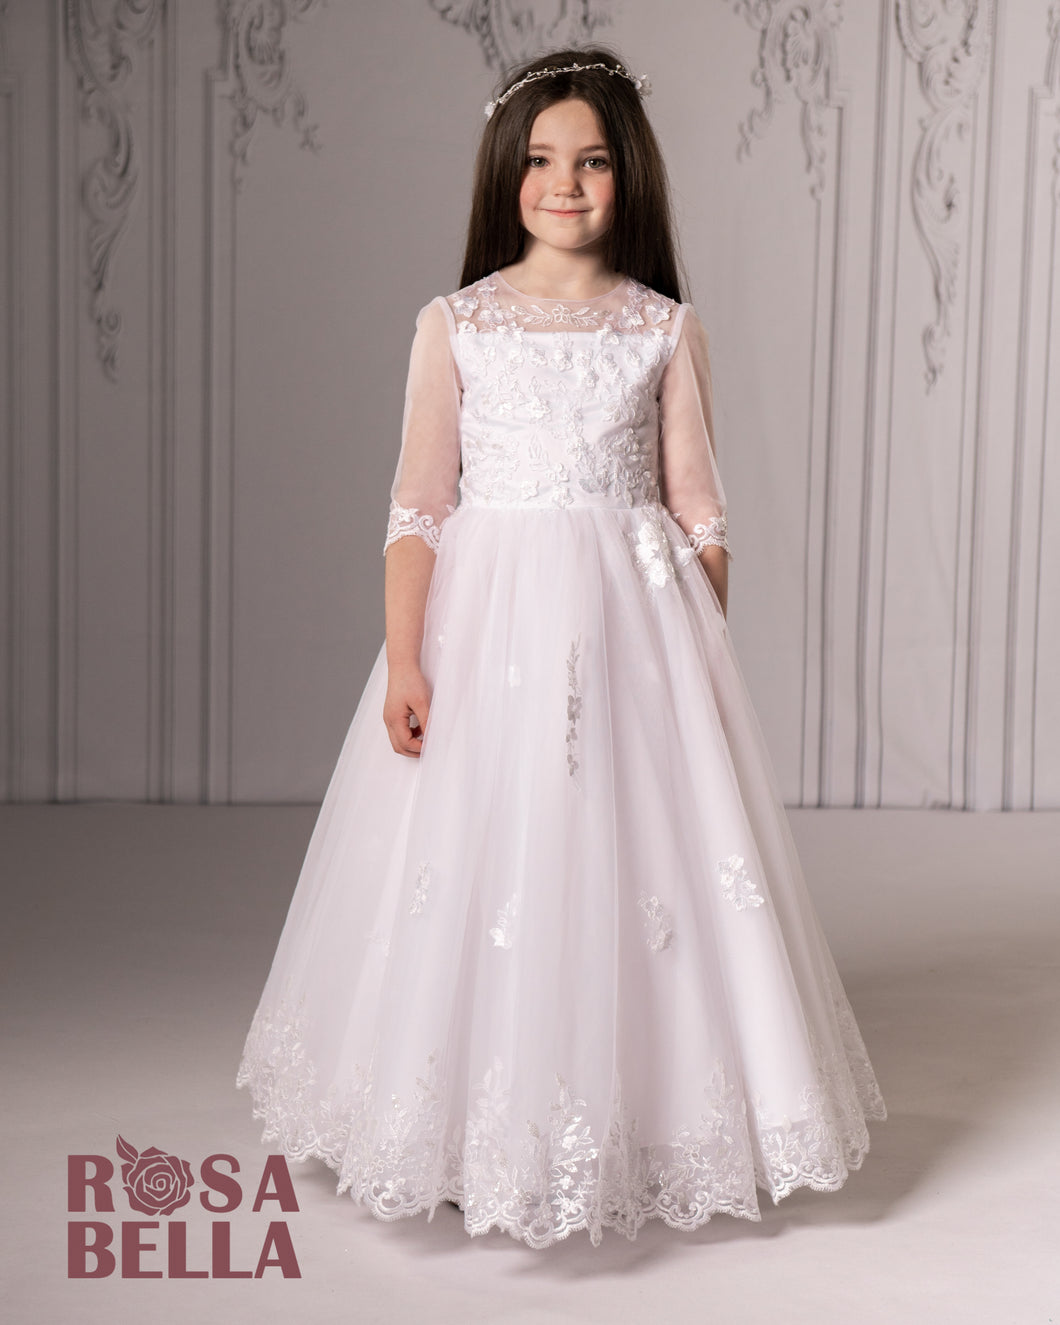 Rosa Bella By Sweetie Pie Girls White Communion Dress:- RB300